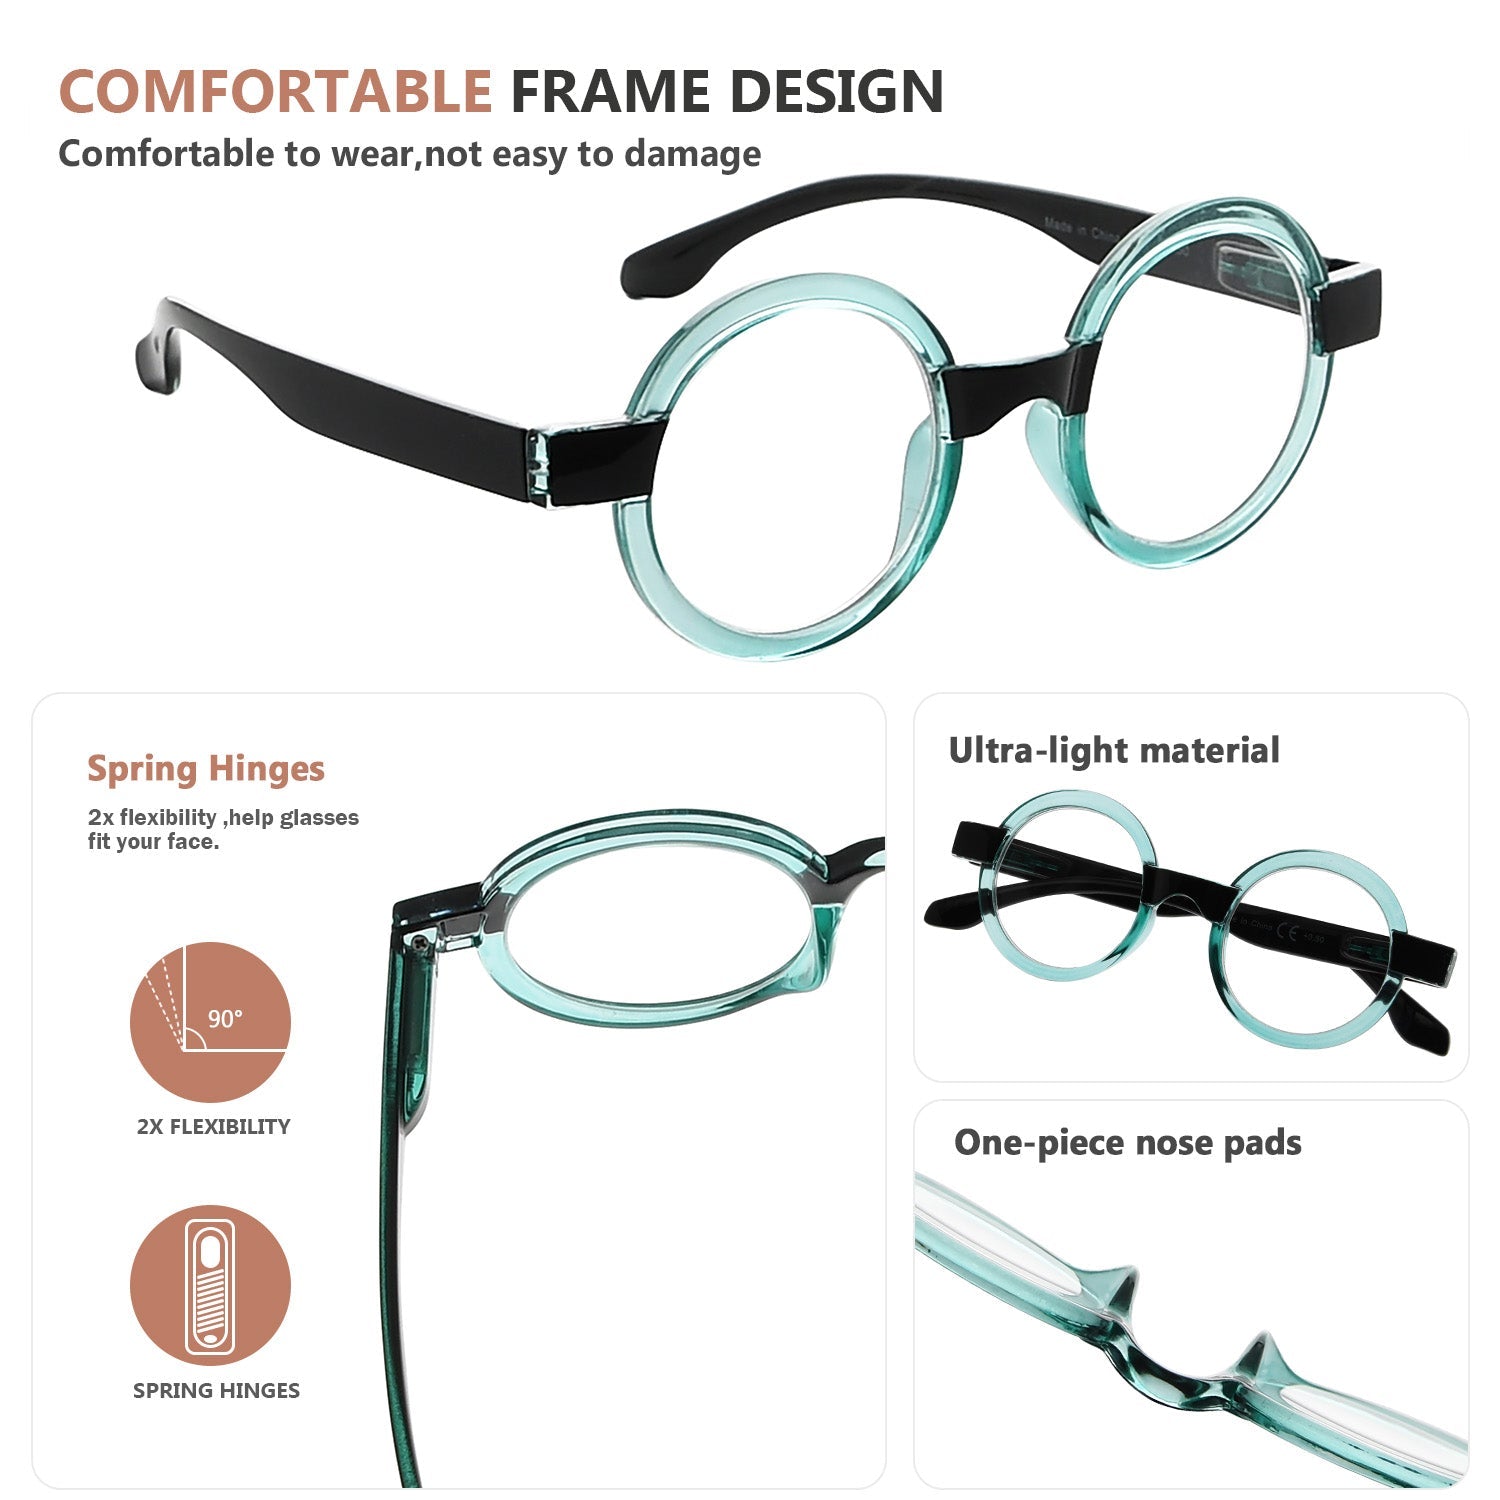 4 Pack Round Retro Design Reading Glasses for Women R2007C